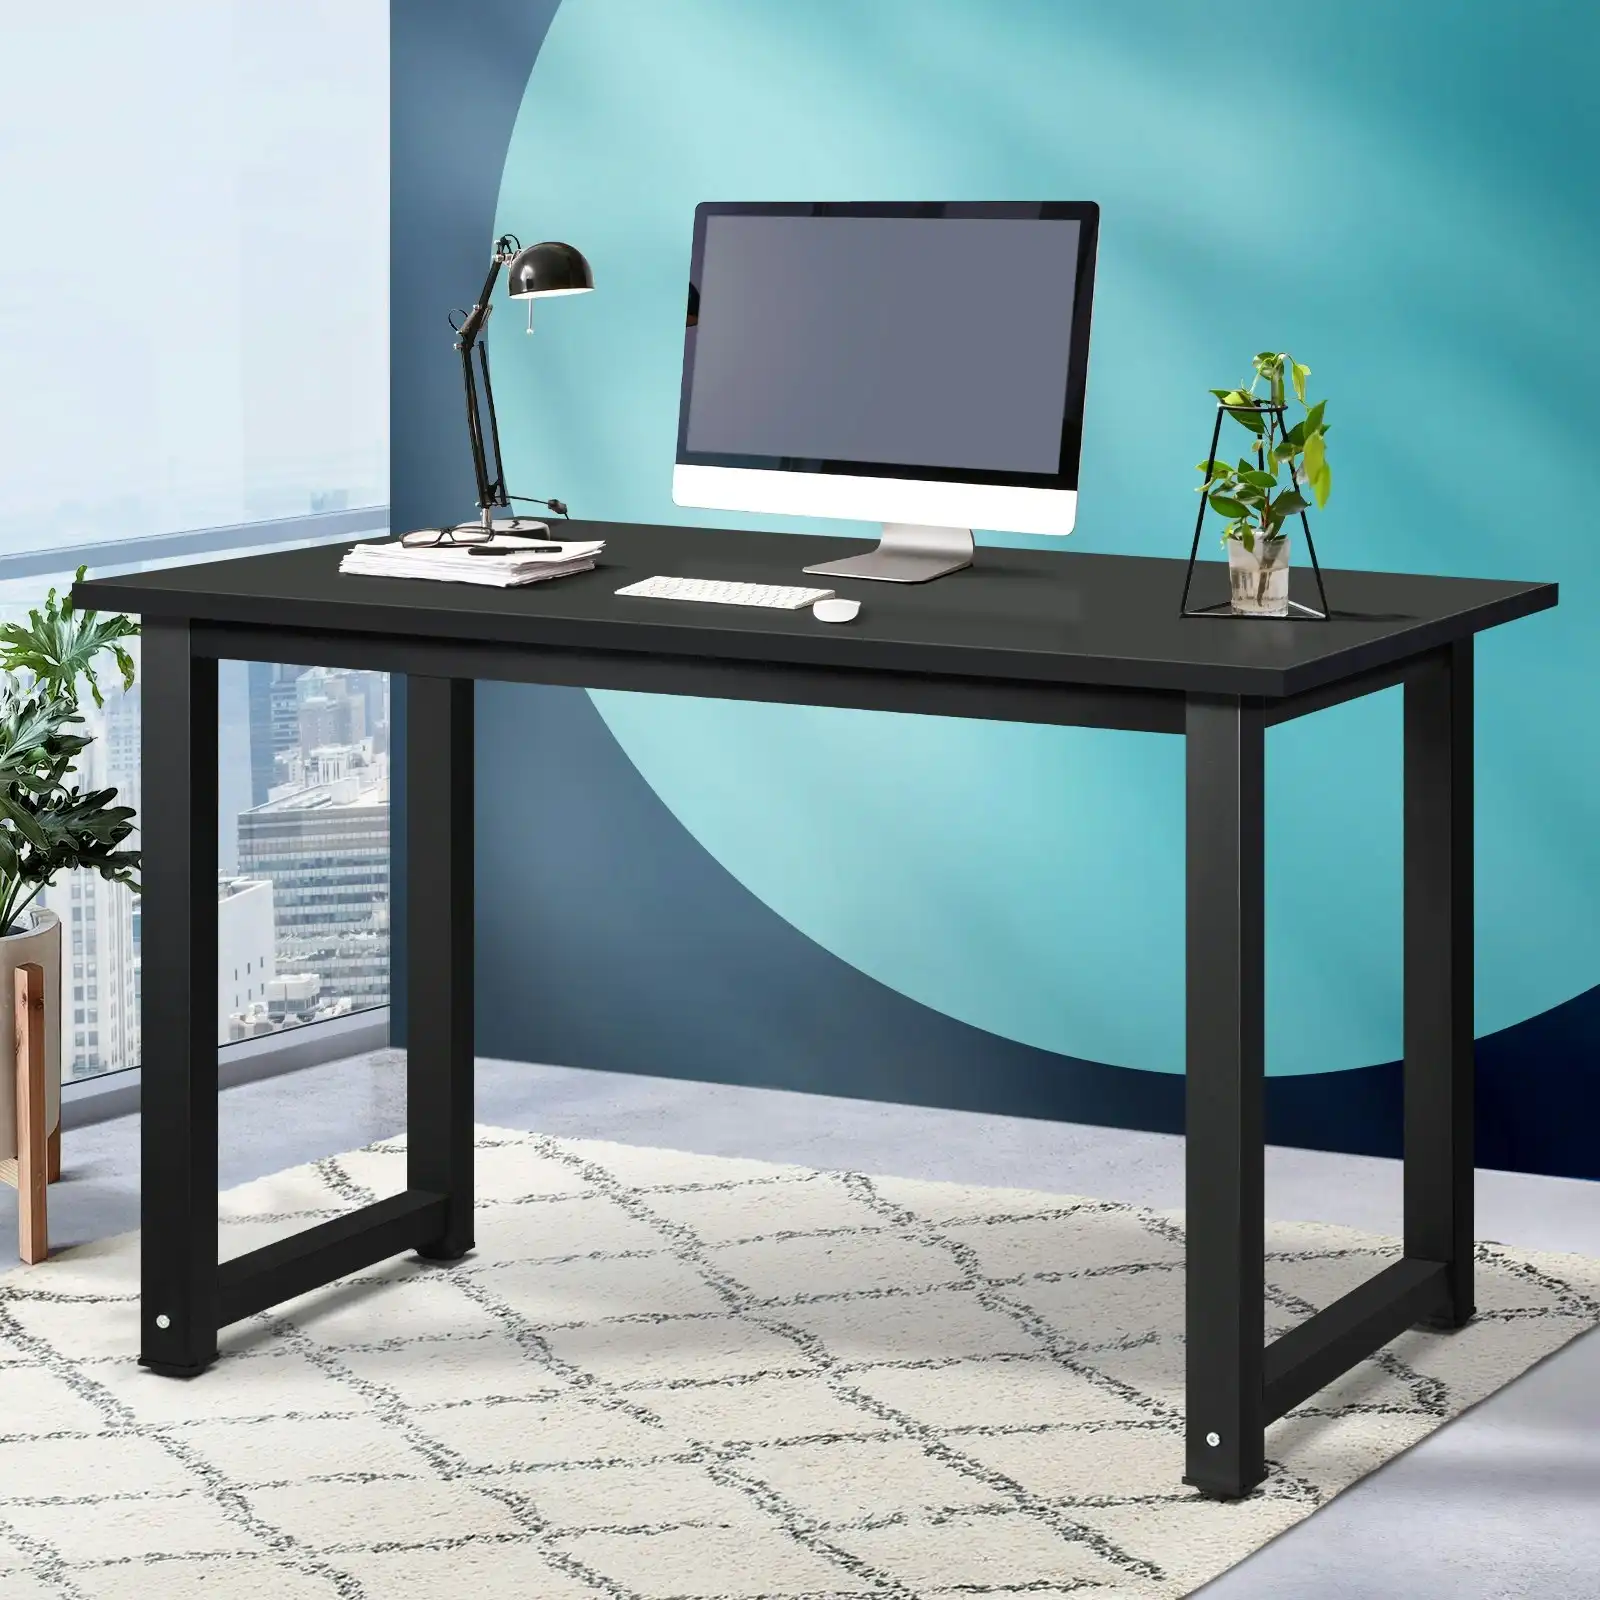 Oikiture Computer Desk Home Office Table Study Workstation Laptop Desks 120cm